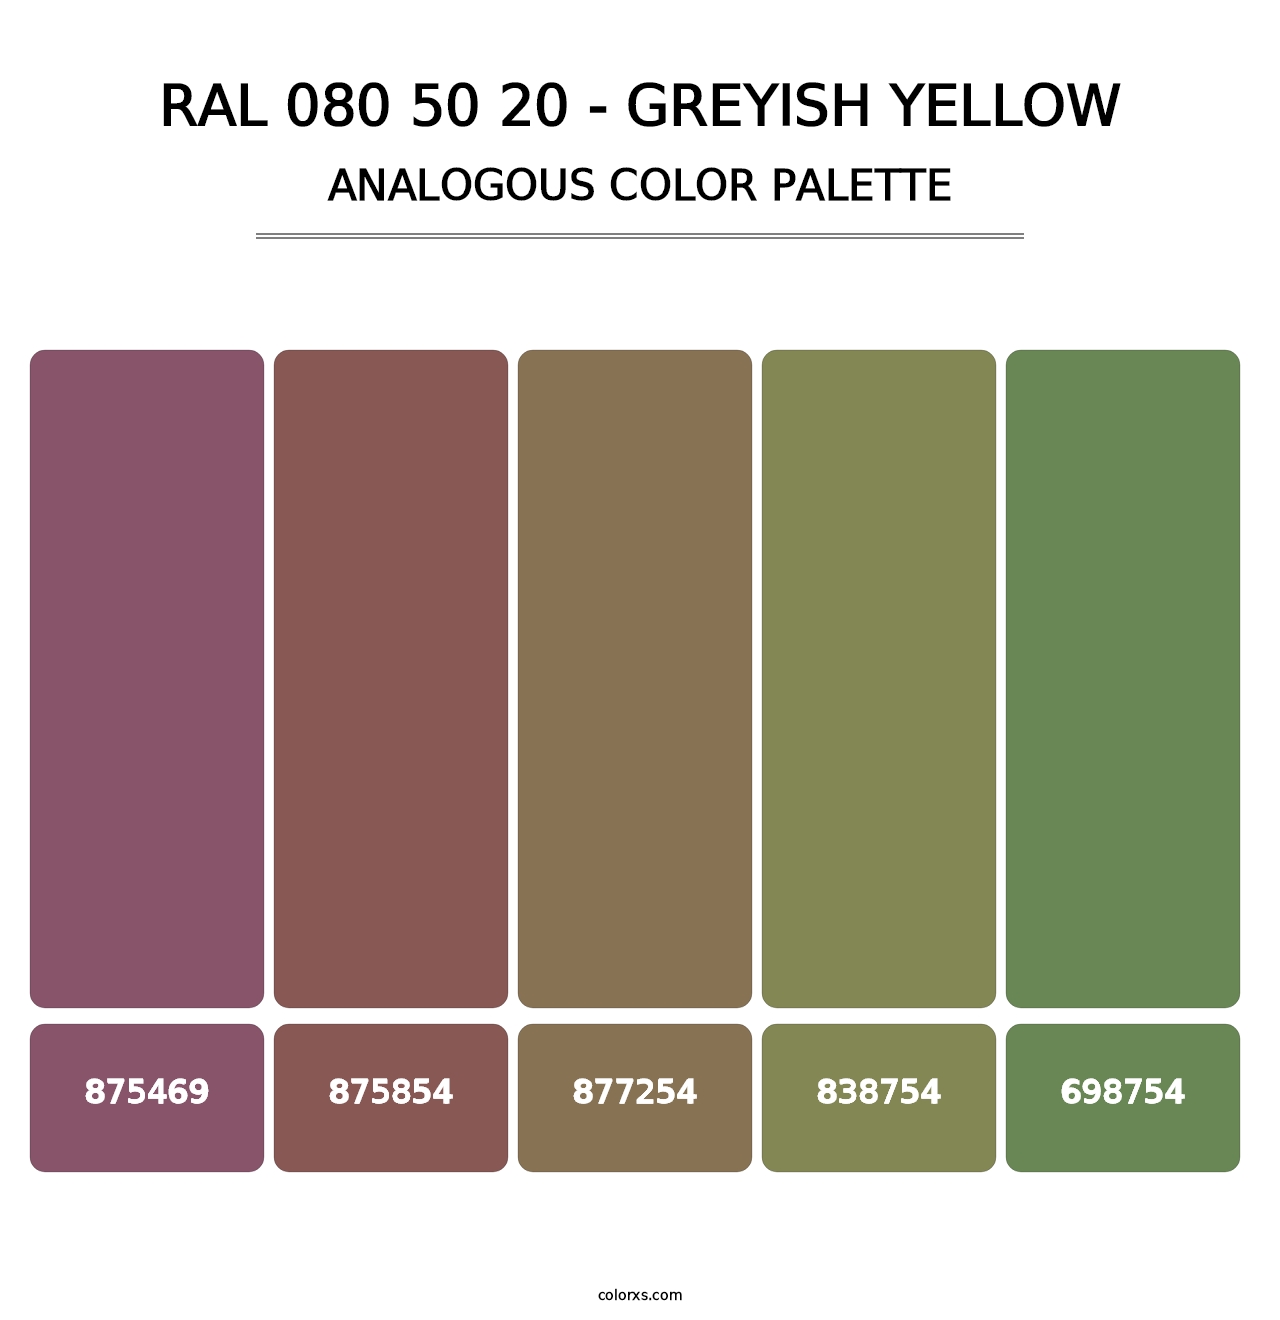 RAL 080 50 20 - Greyish Yellow - Analogous Color Palette